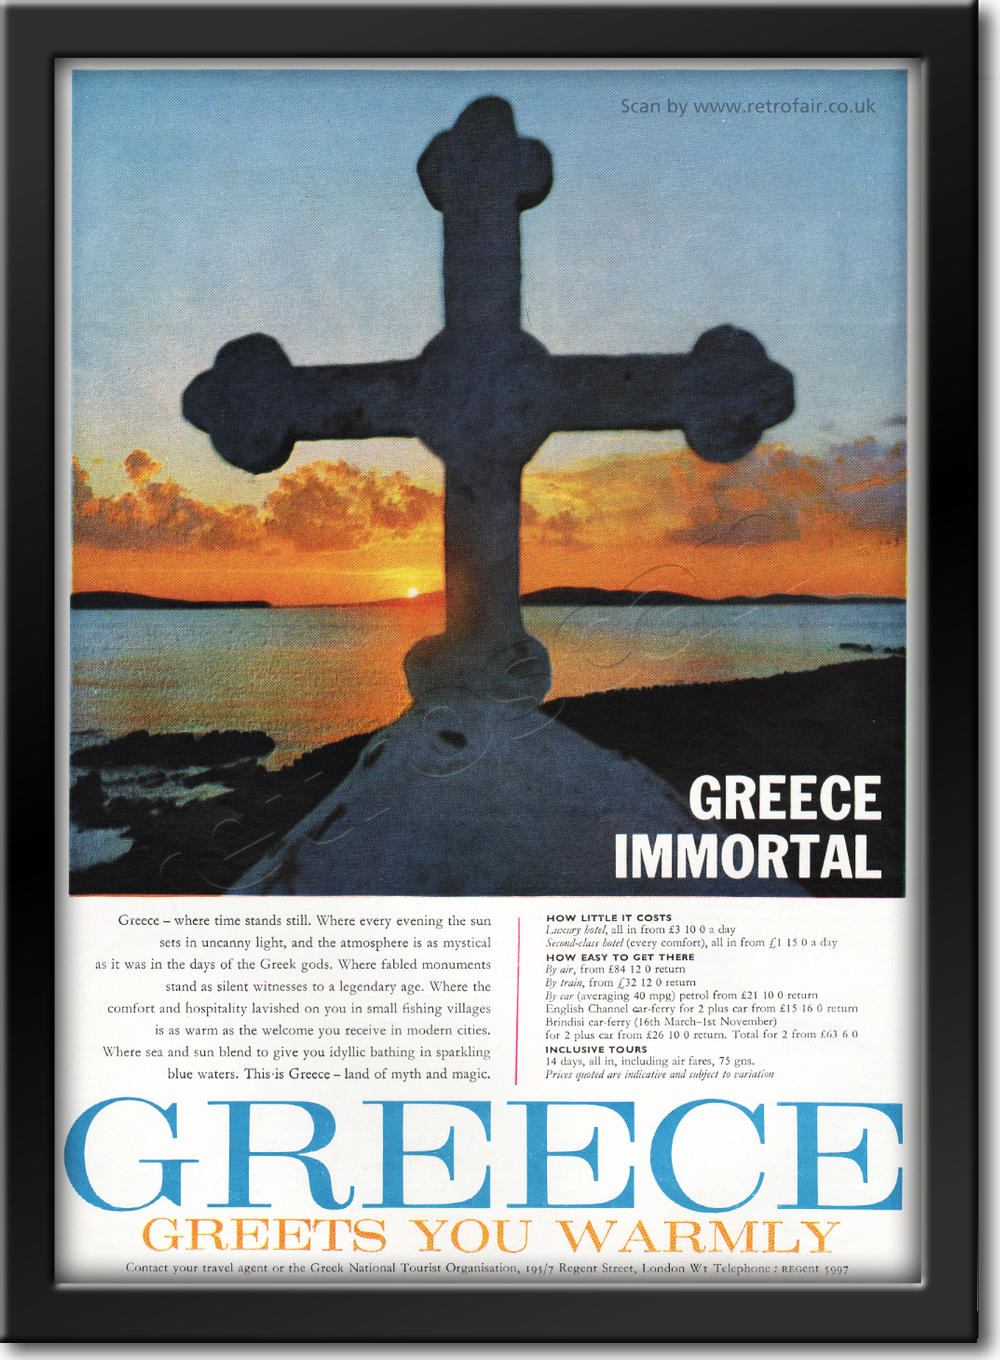 1962 vintage Greek National Tourist Organisation advert